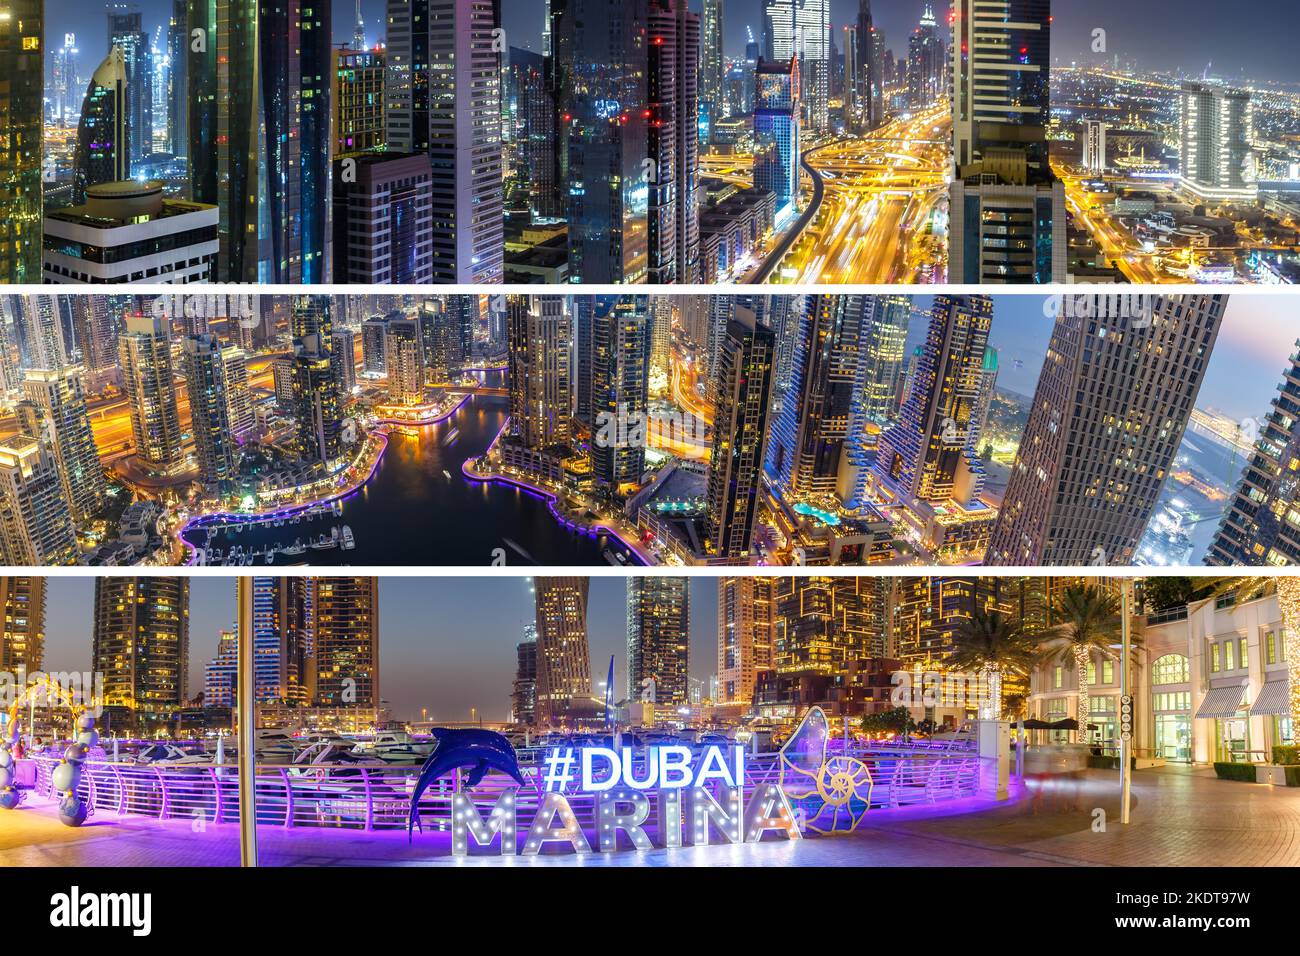 Dubai, United Arab Emirates - May 23, 2021: Dubai Collage Skyline Architecture Vacation In Arabia By Night In Dubai, United Arab Emirates. Stock Photo